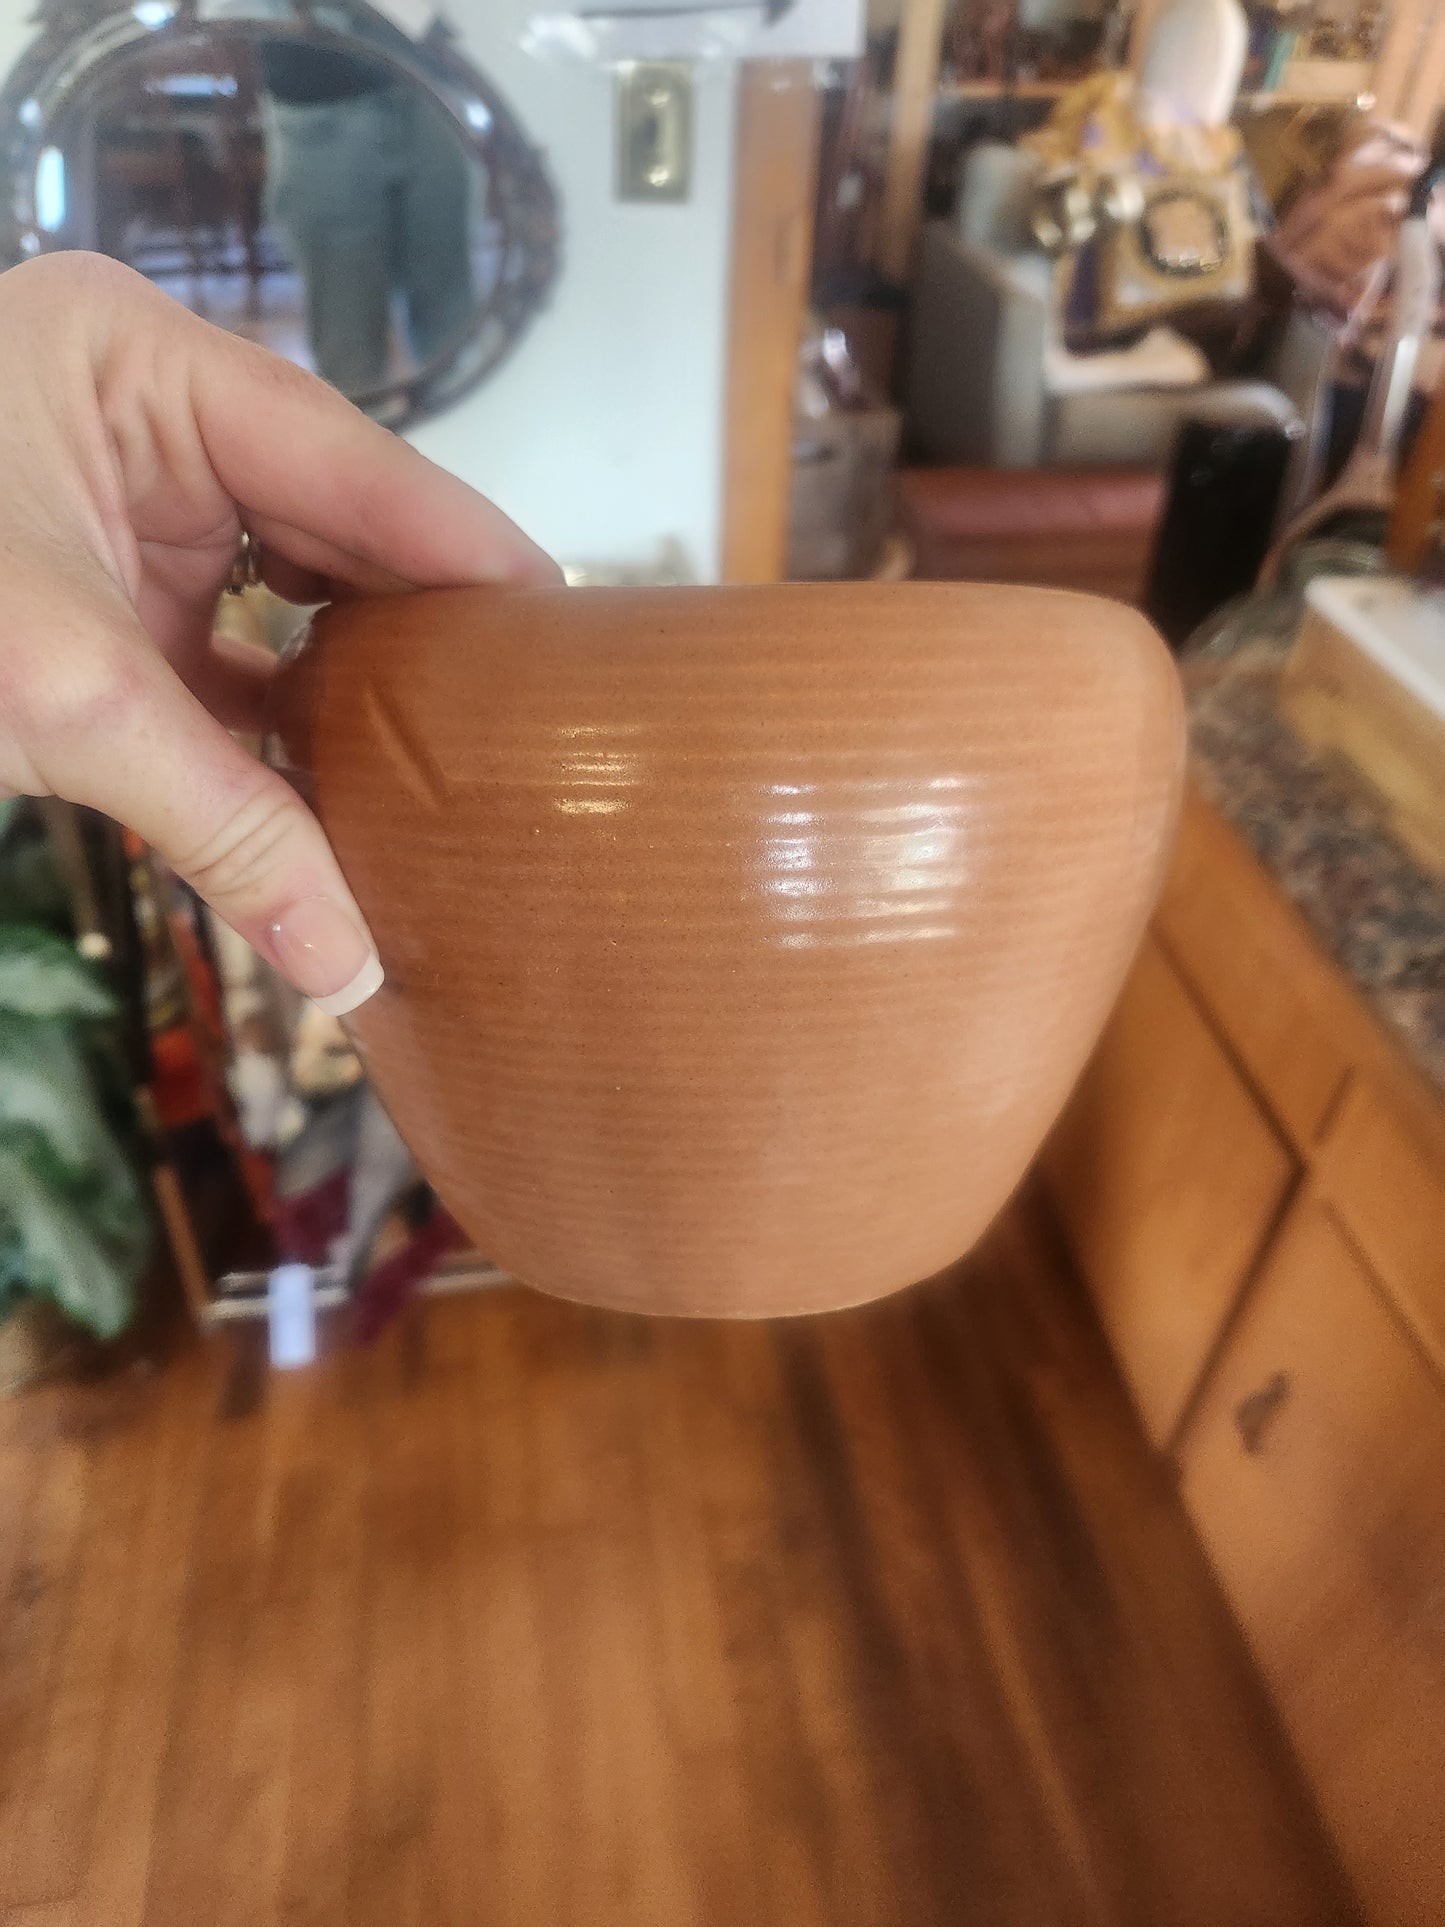 Orange Pottery Plant Pot